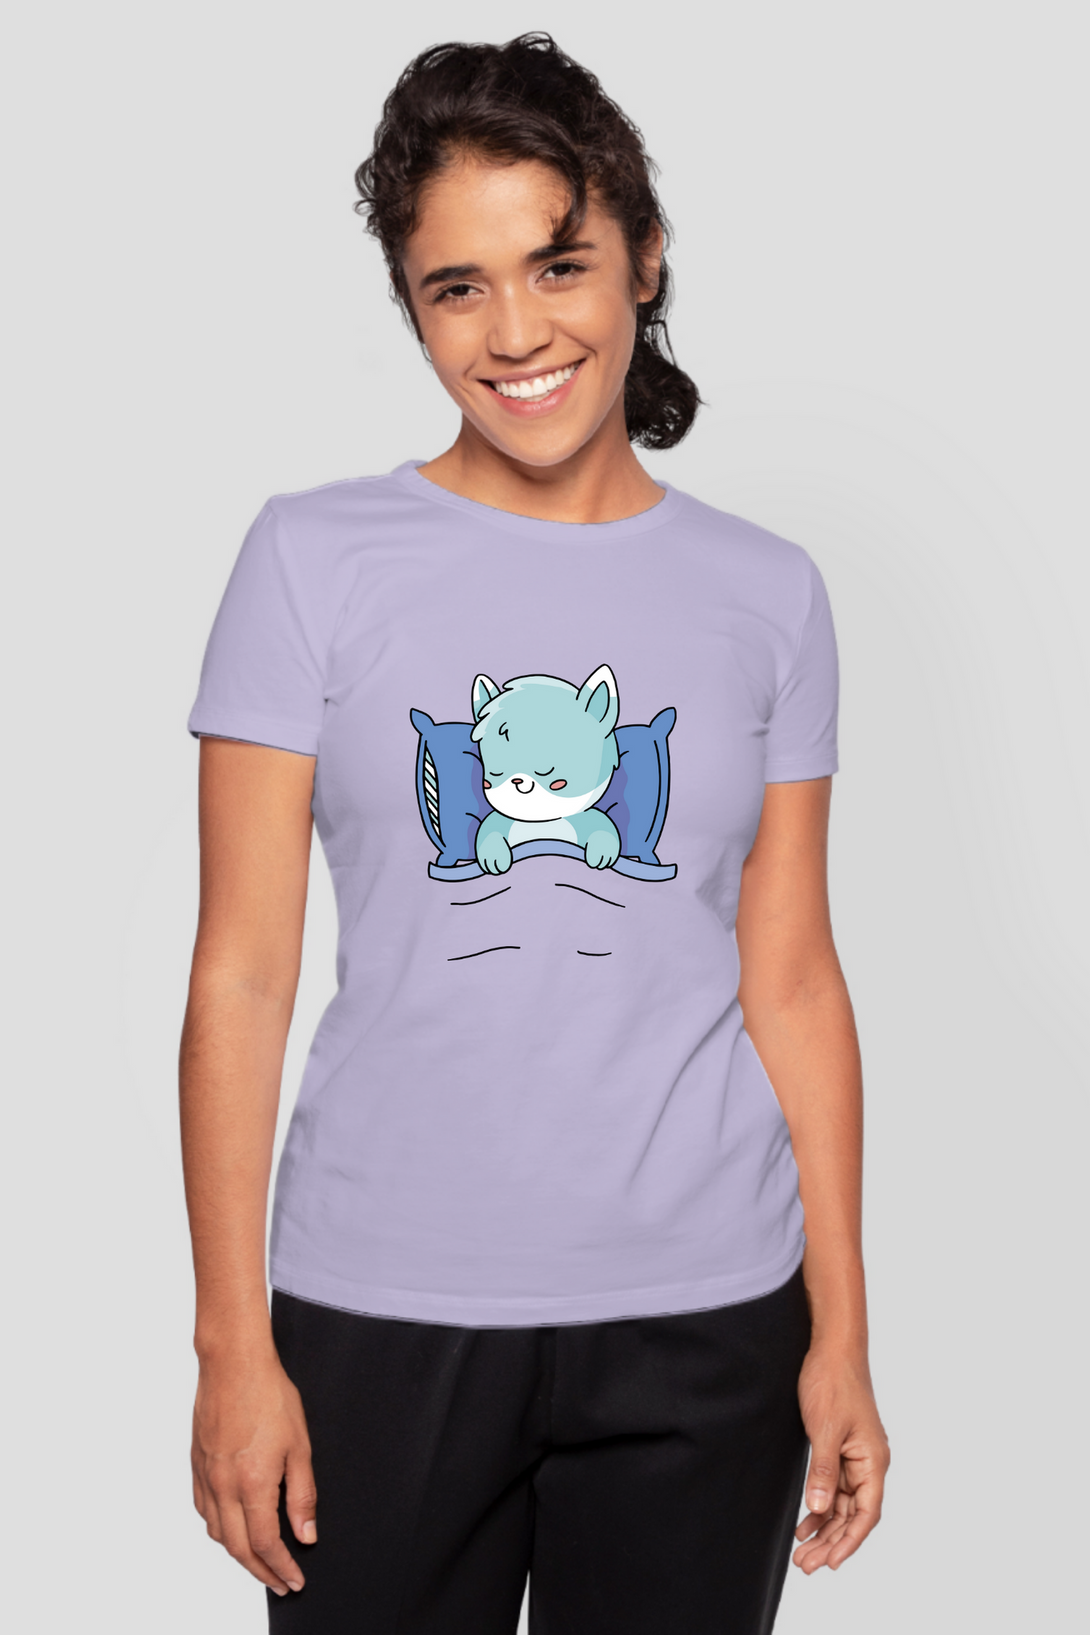 Cute Sleeping Cat Printed T-Shirt For Women - WowWaves - 8